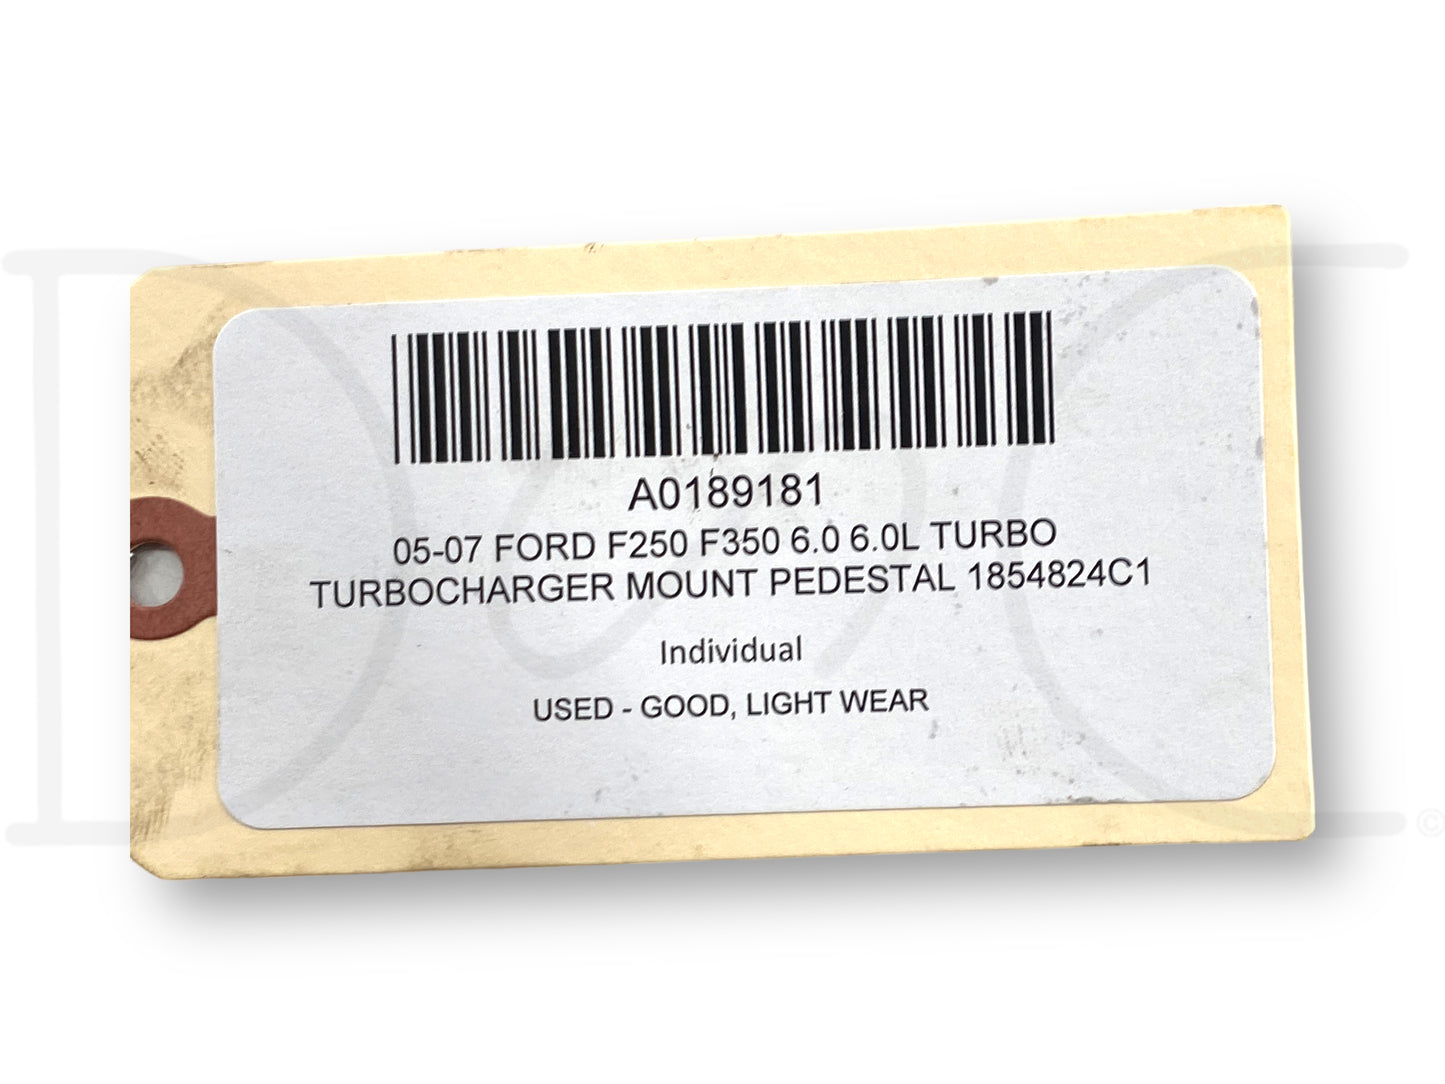 05-07 Ford F250 F350 6.0 6.0L Turbo Turbocharger Mount Pedestal 1854824C1